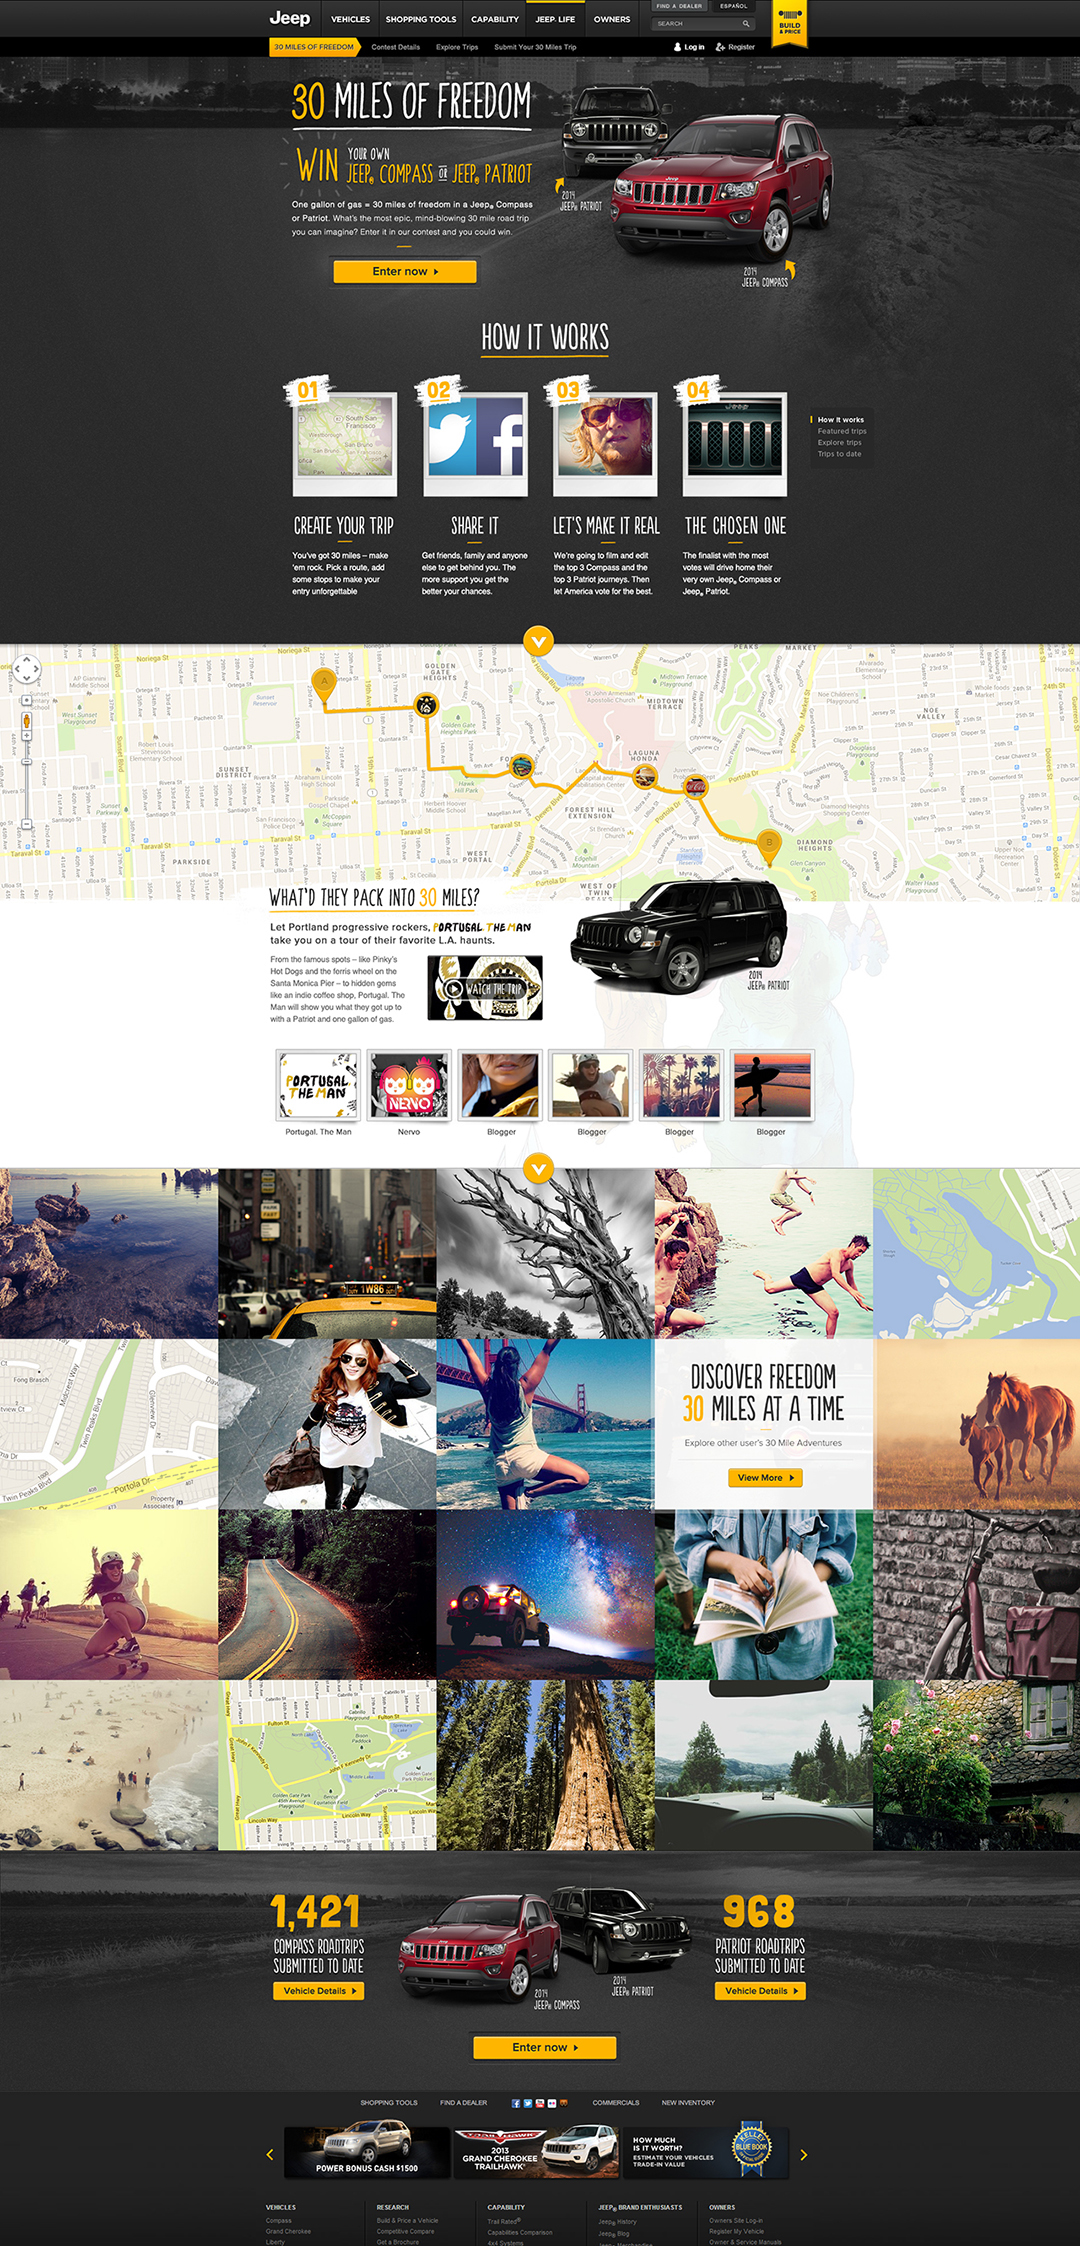 Adobe Portfolio jeep compass patriot Vehicle automotive   OLA campaign online